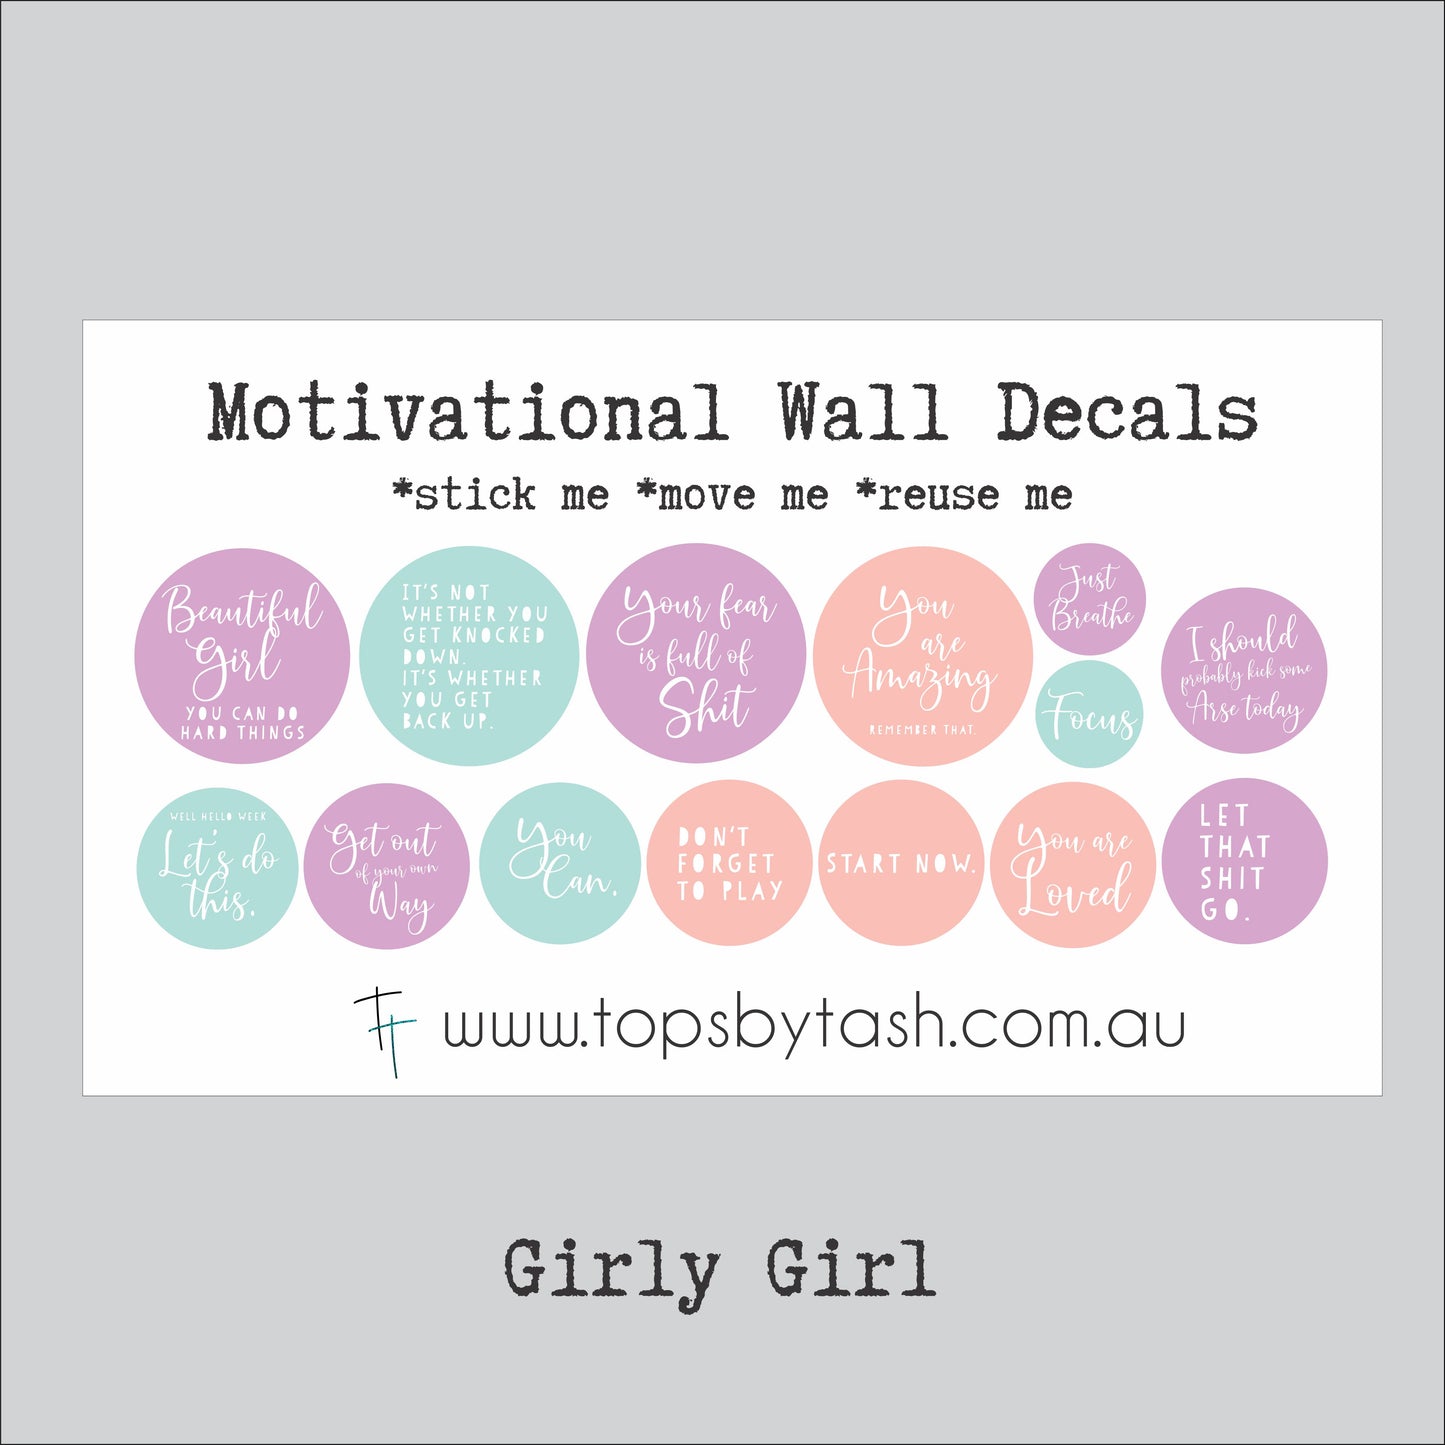 Motivational Wall Decals - Beautiful Girl - Little bit sweary